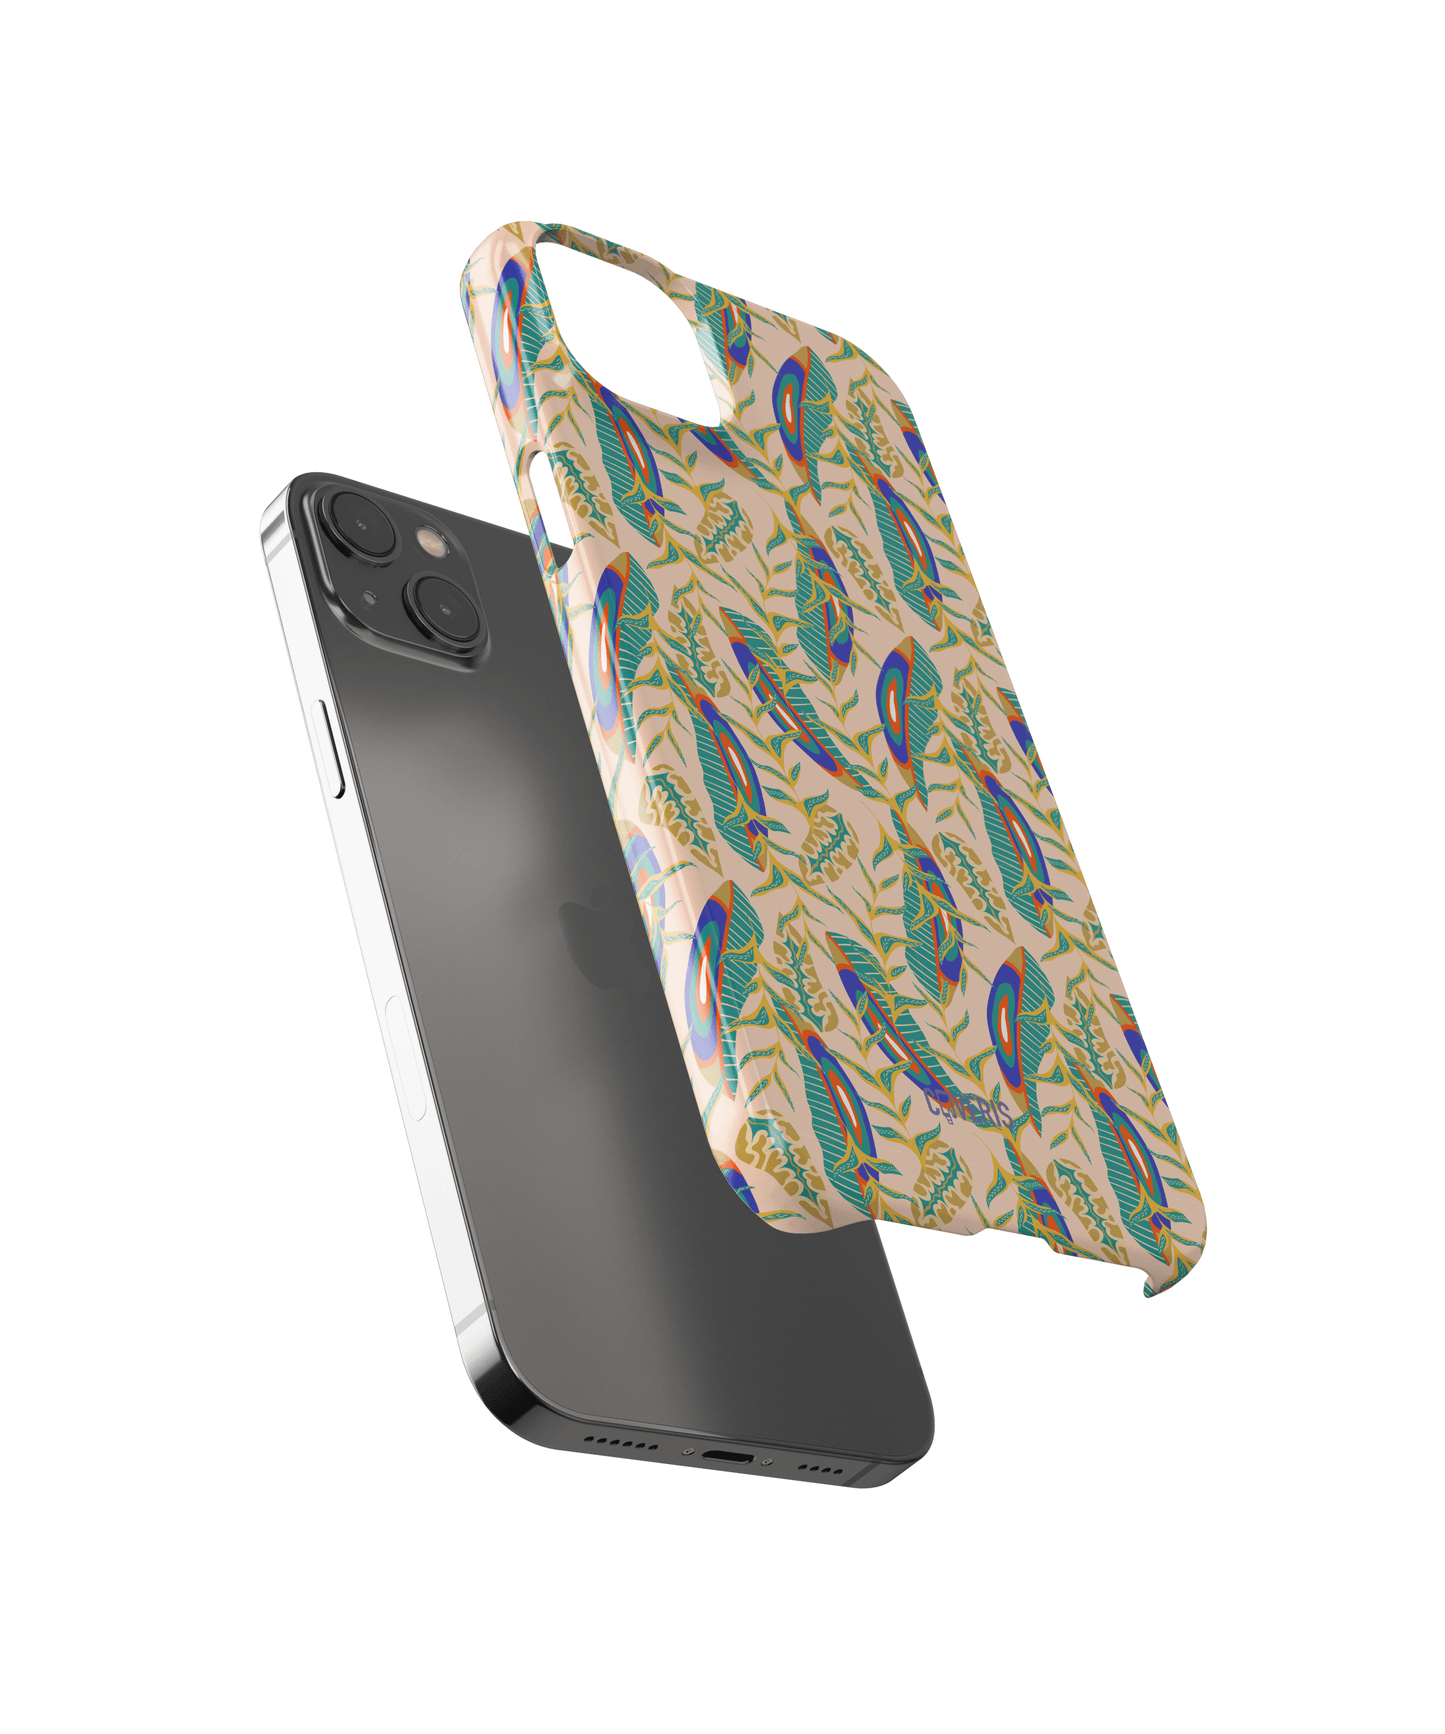 Breezy - Samsung Galaxy S9 Plus phone case